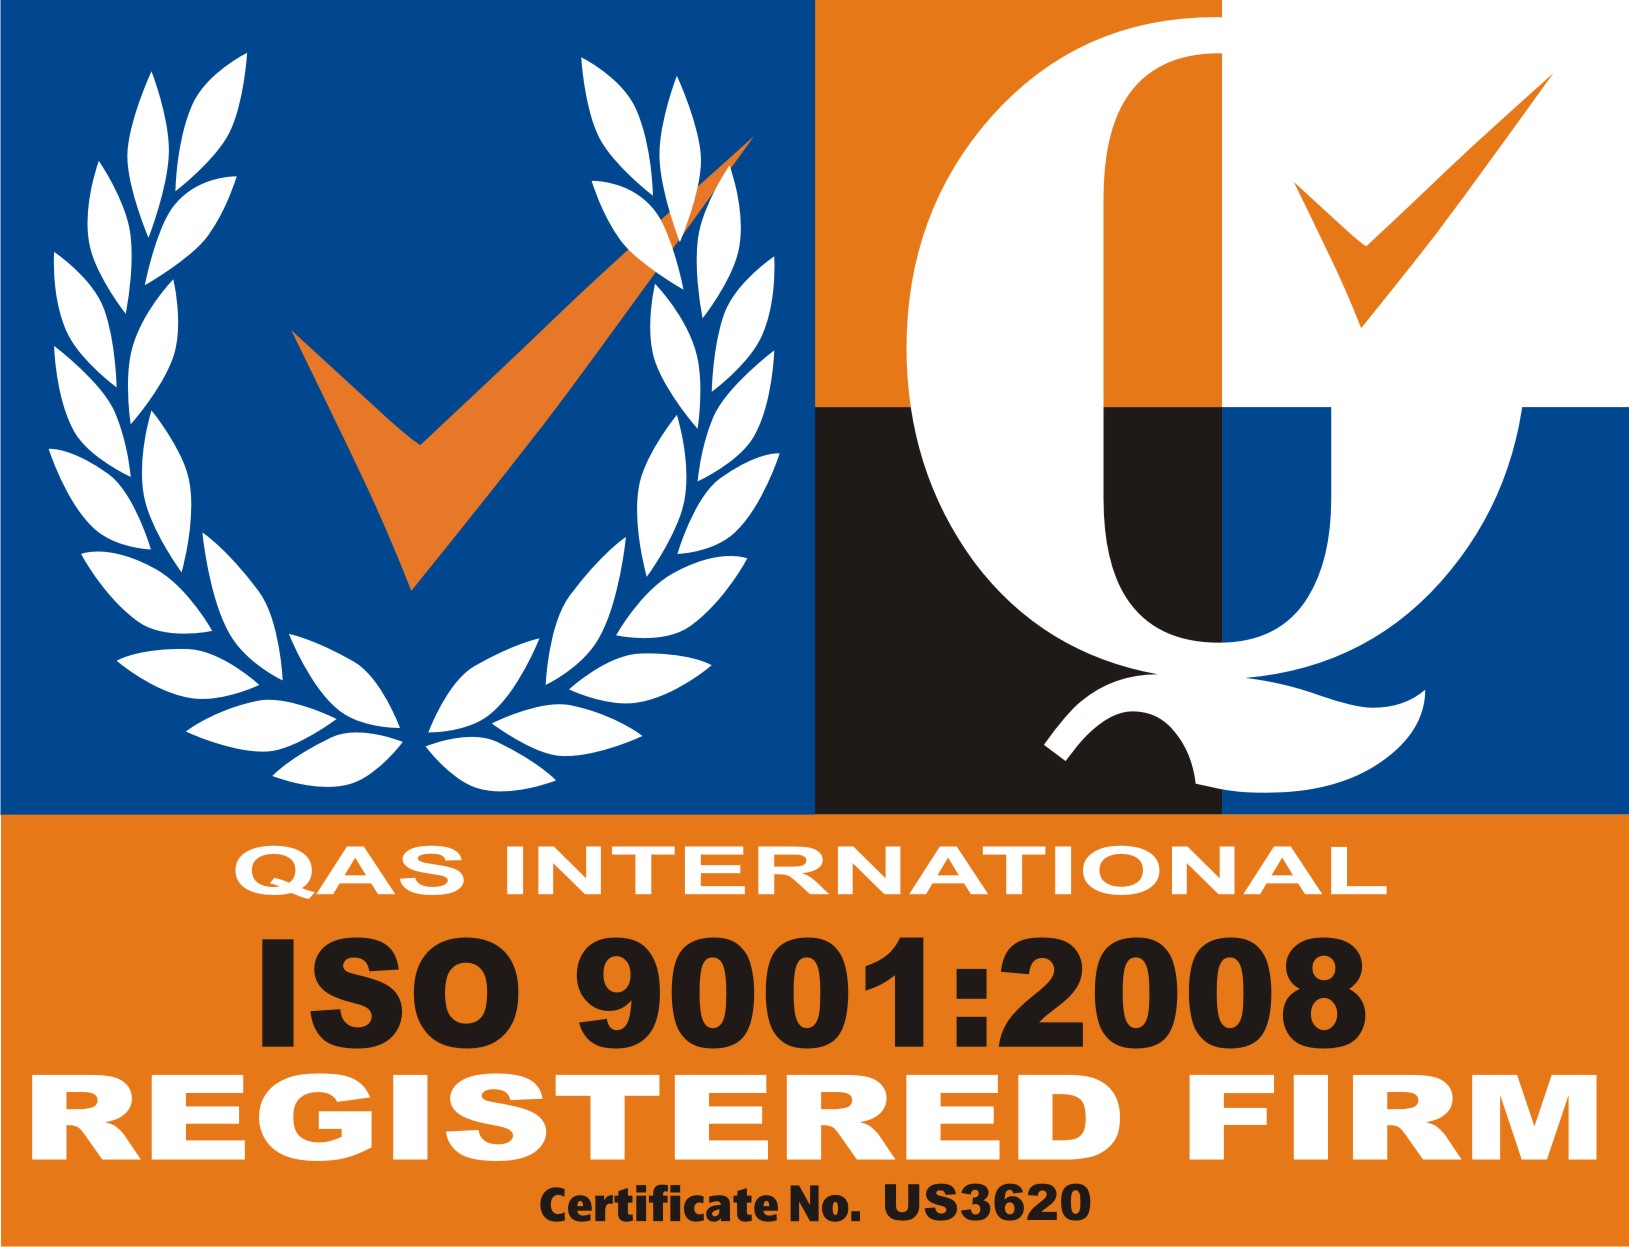 ISO QAS REGISTERED